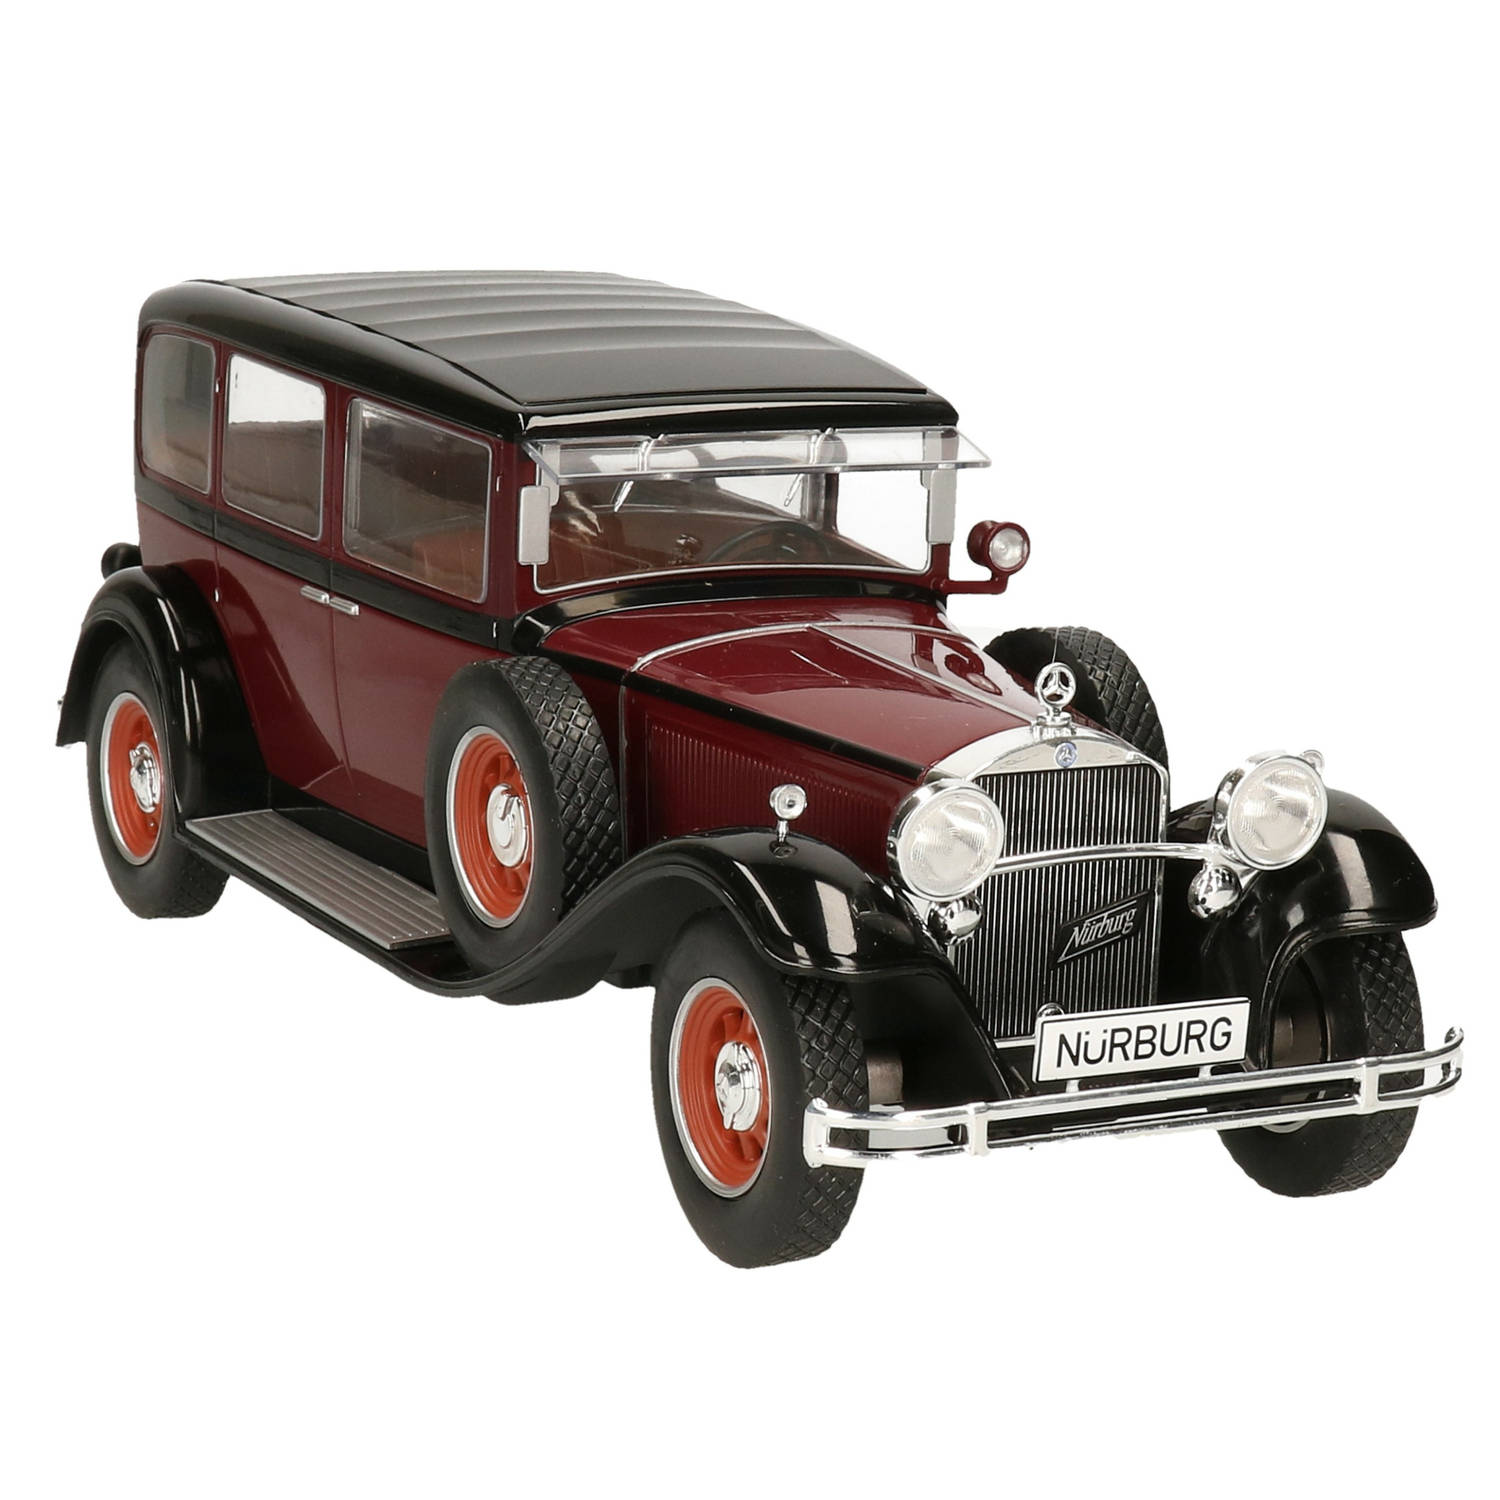 Modelauto-schaalmodel Mercedes-benz Typ Nurburg 460 1928 Schaal 1:18-28 X 9 X 11 Cm Speelgoed Auto&a